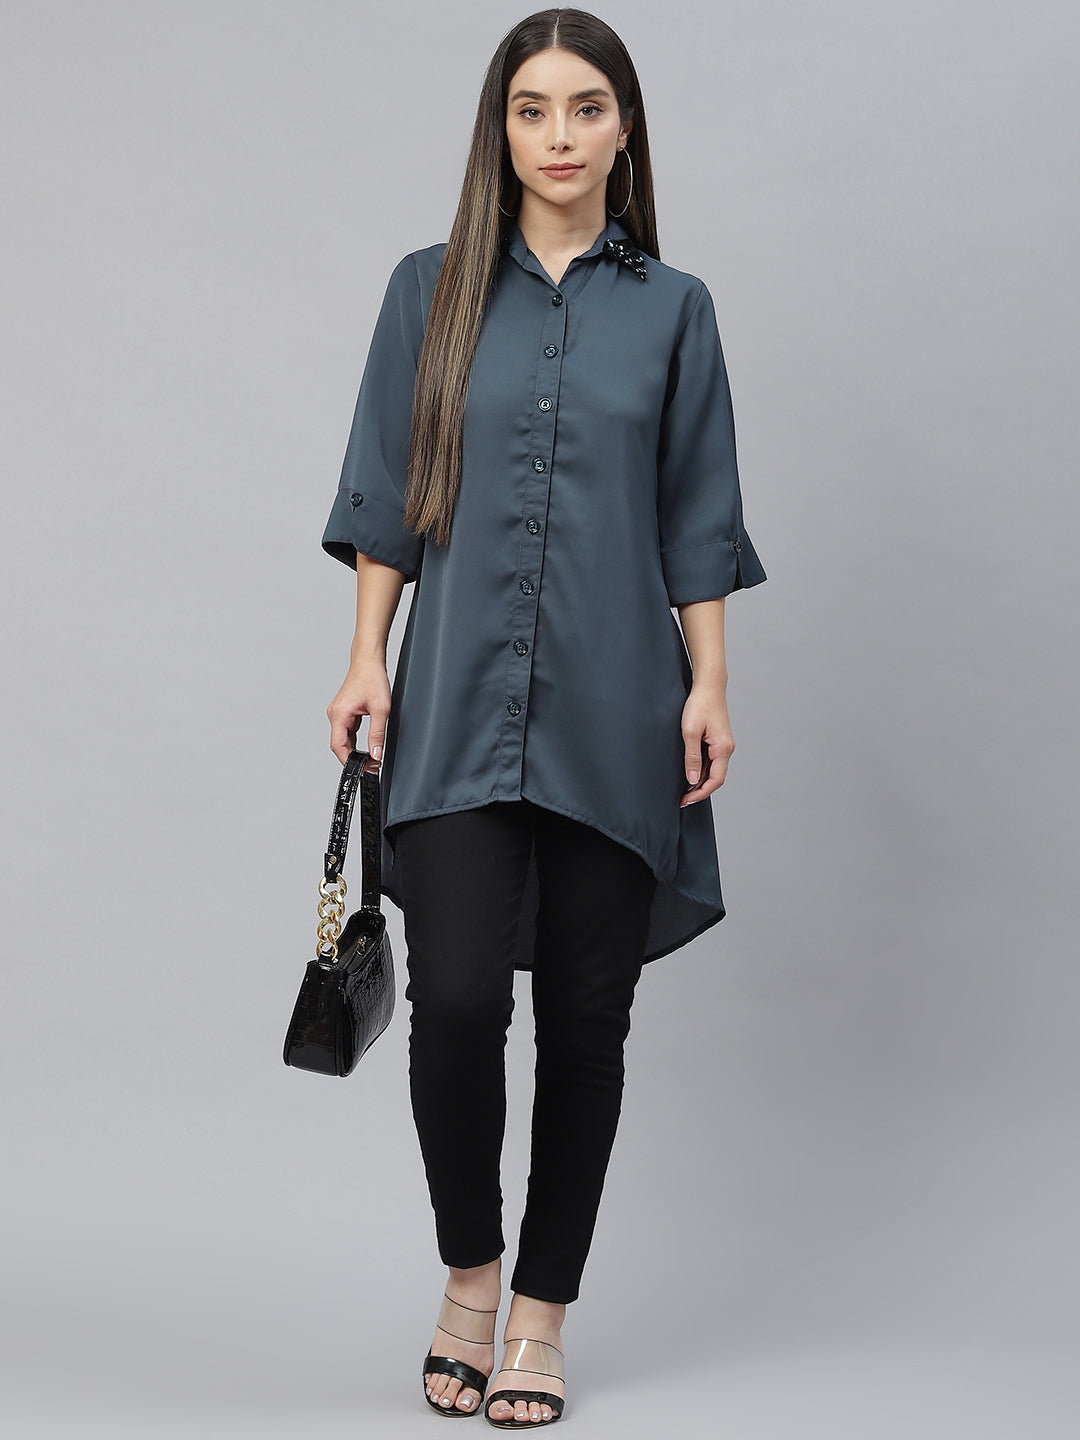 Cottinfab Charcoal Grey Shirt Style Longline Top